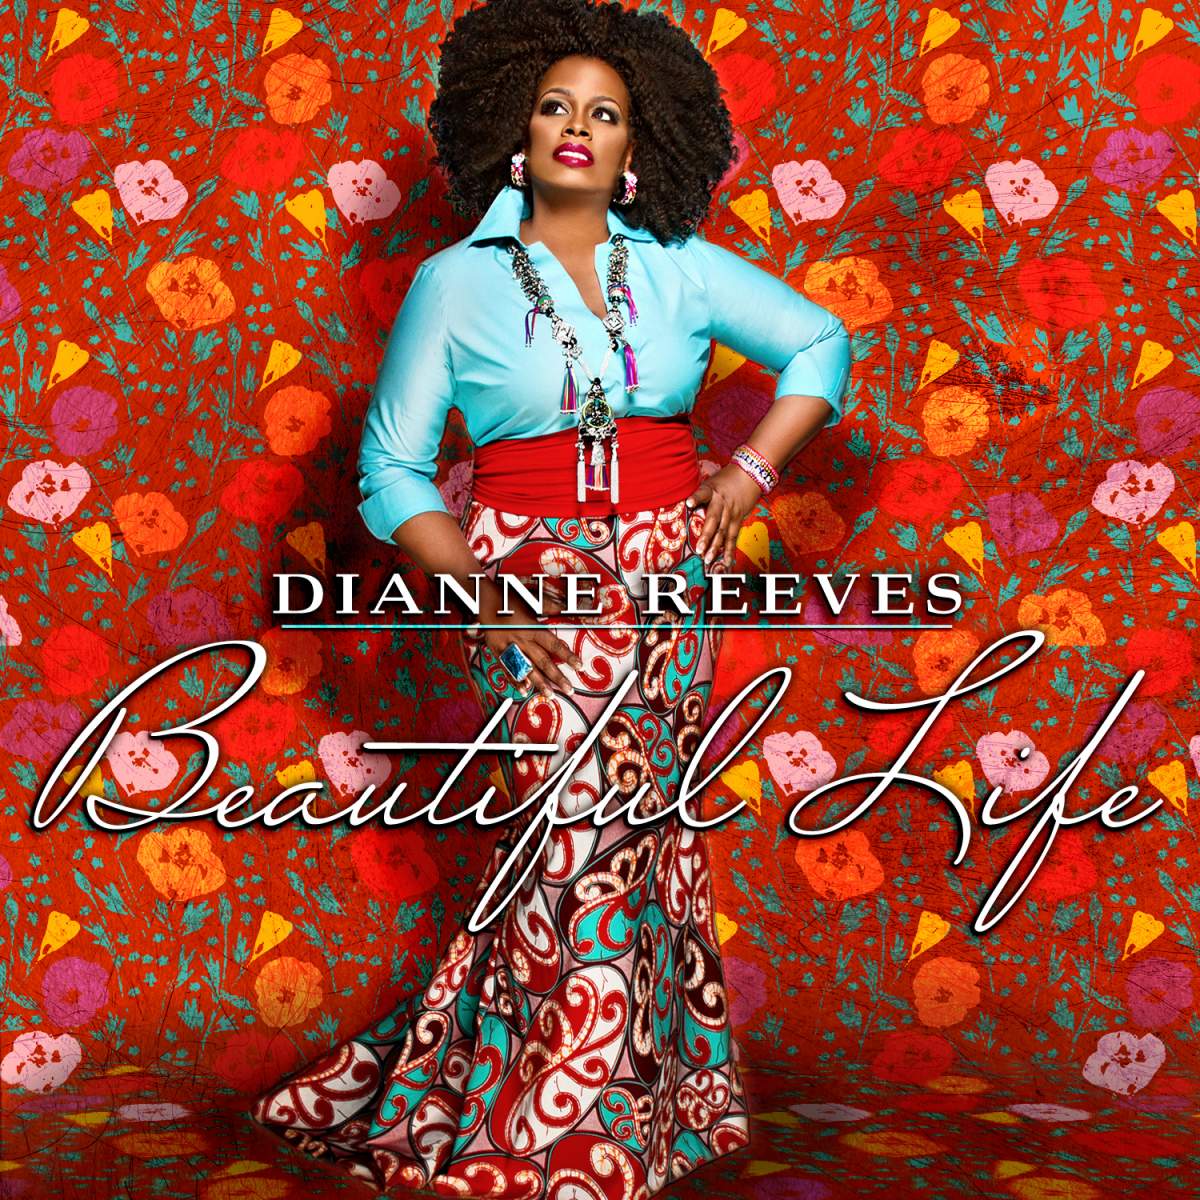 Diane Reeves - Beautiful Life